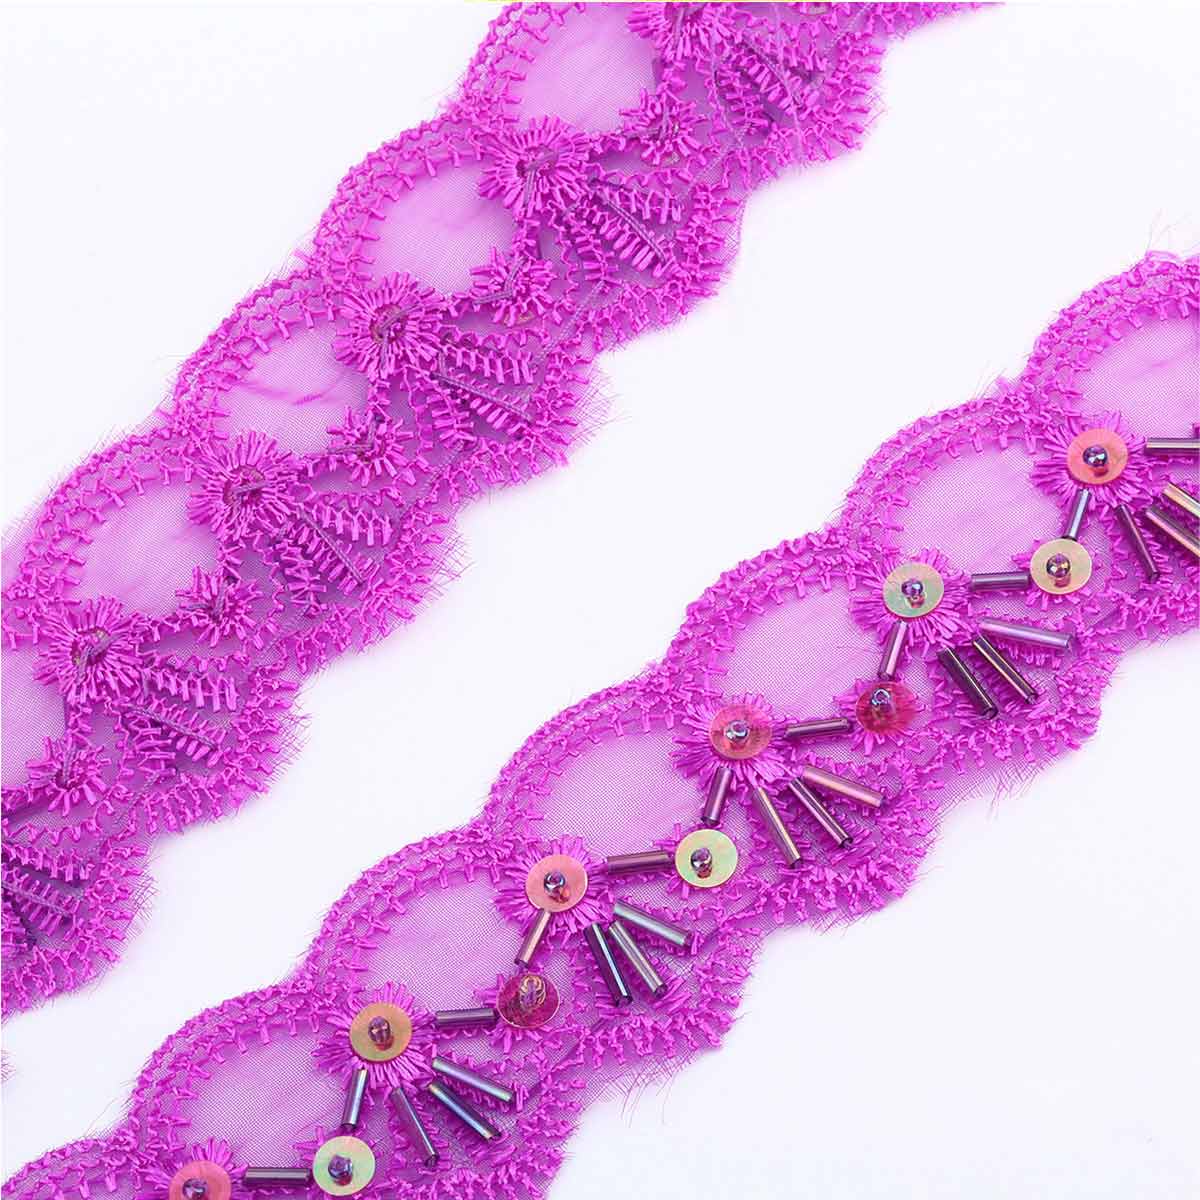 Sequin Lace Fabric purple